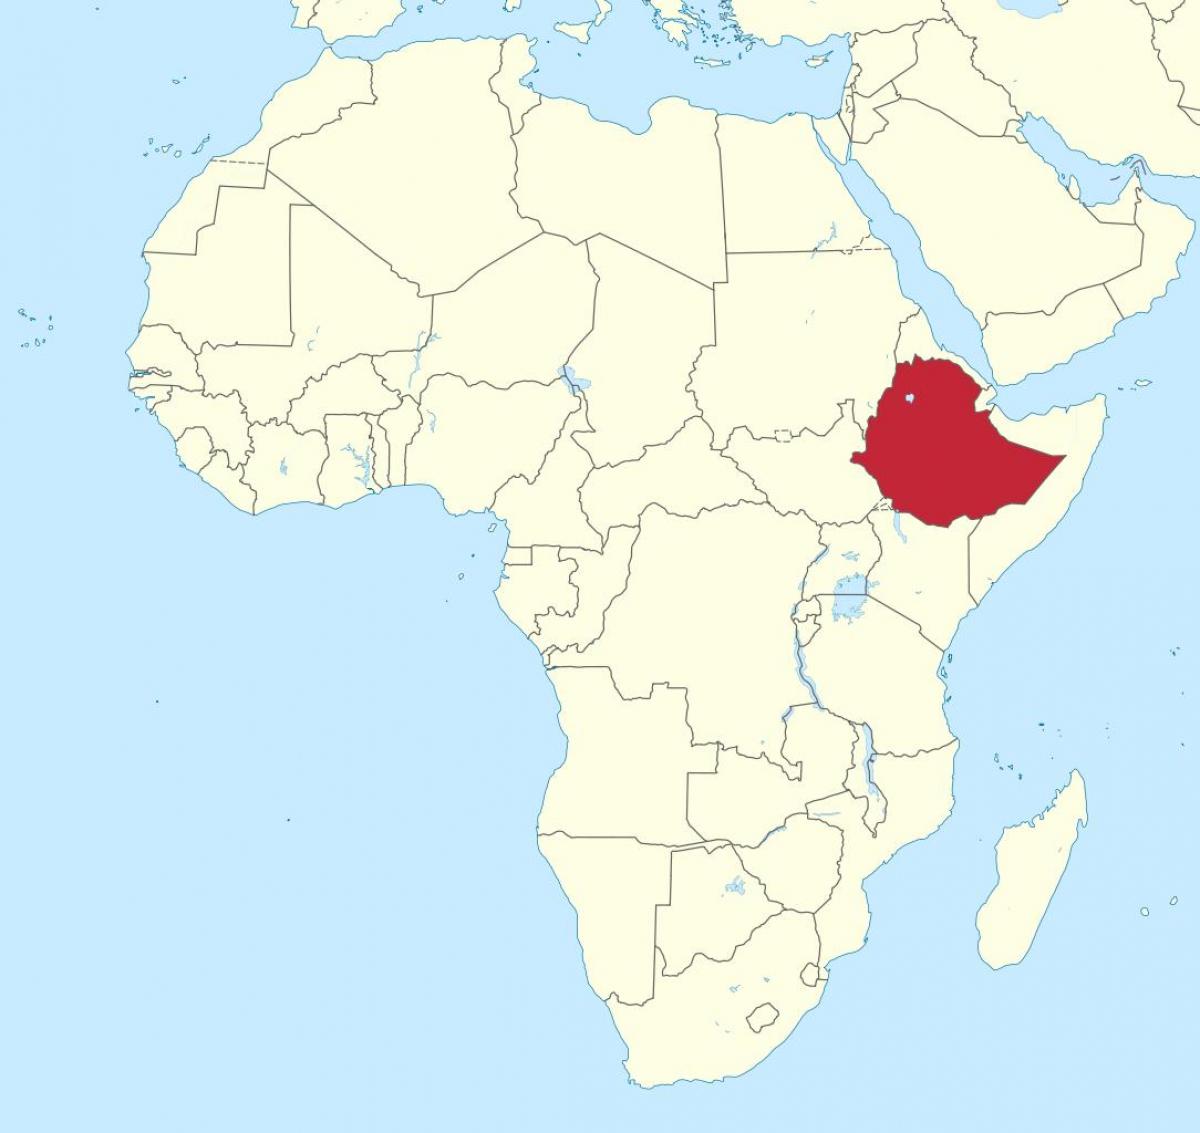 kort over afrika viser Etiopien